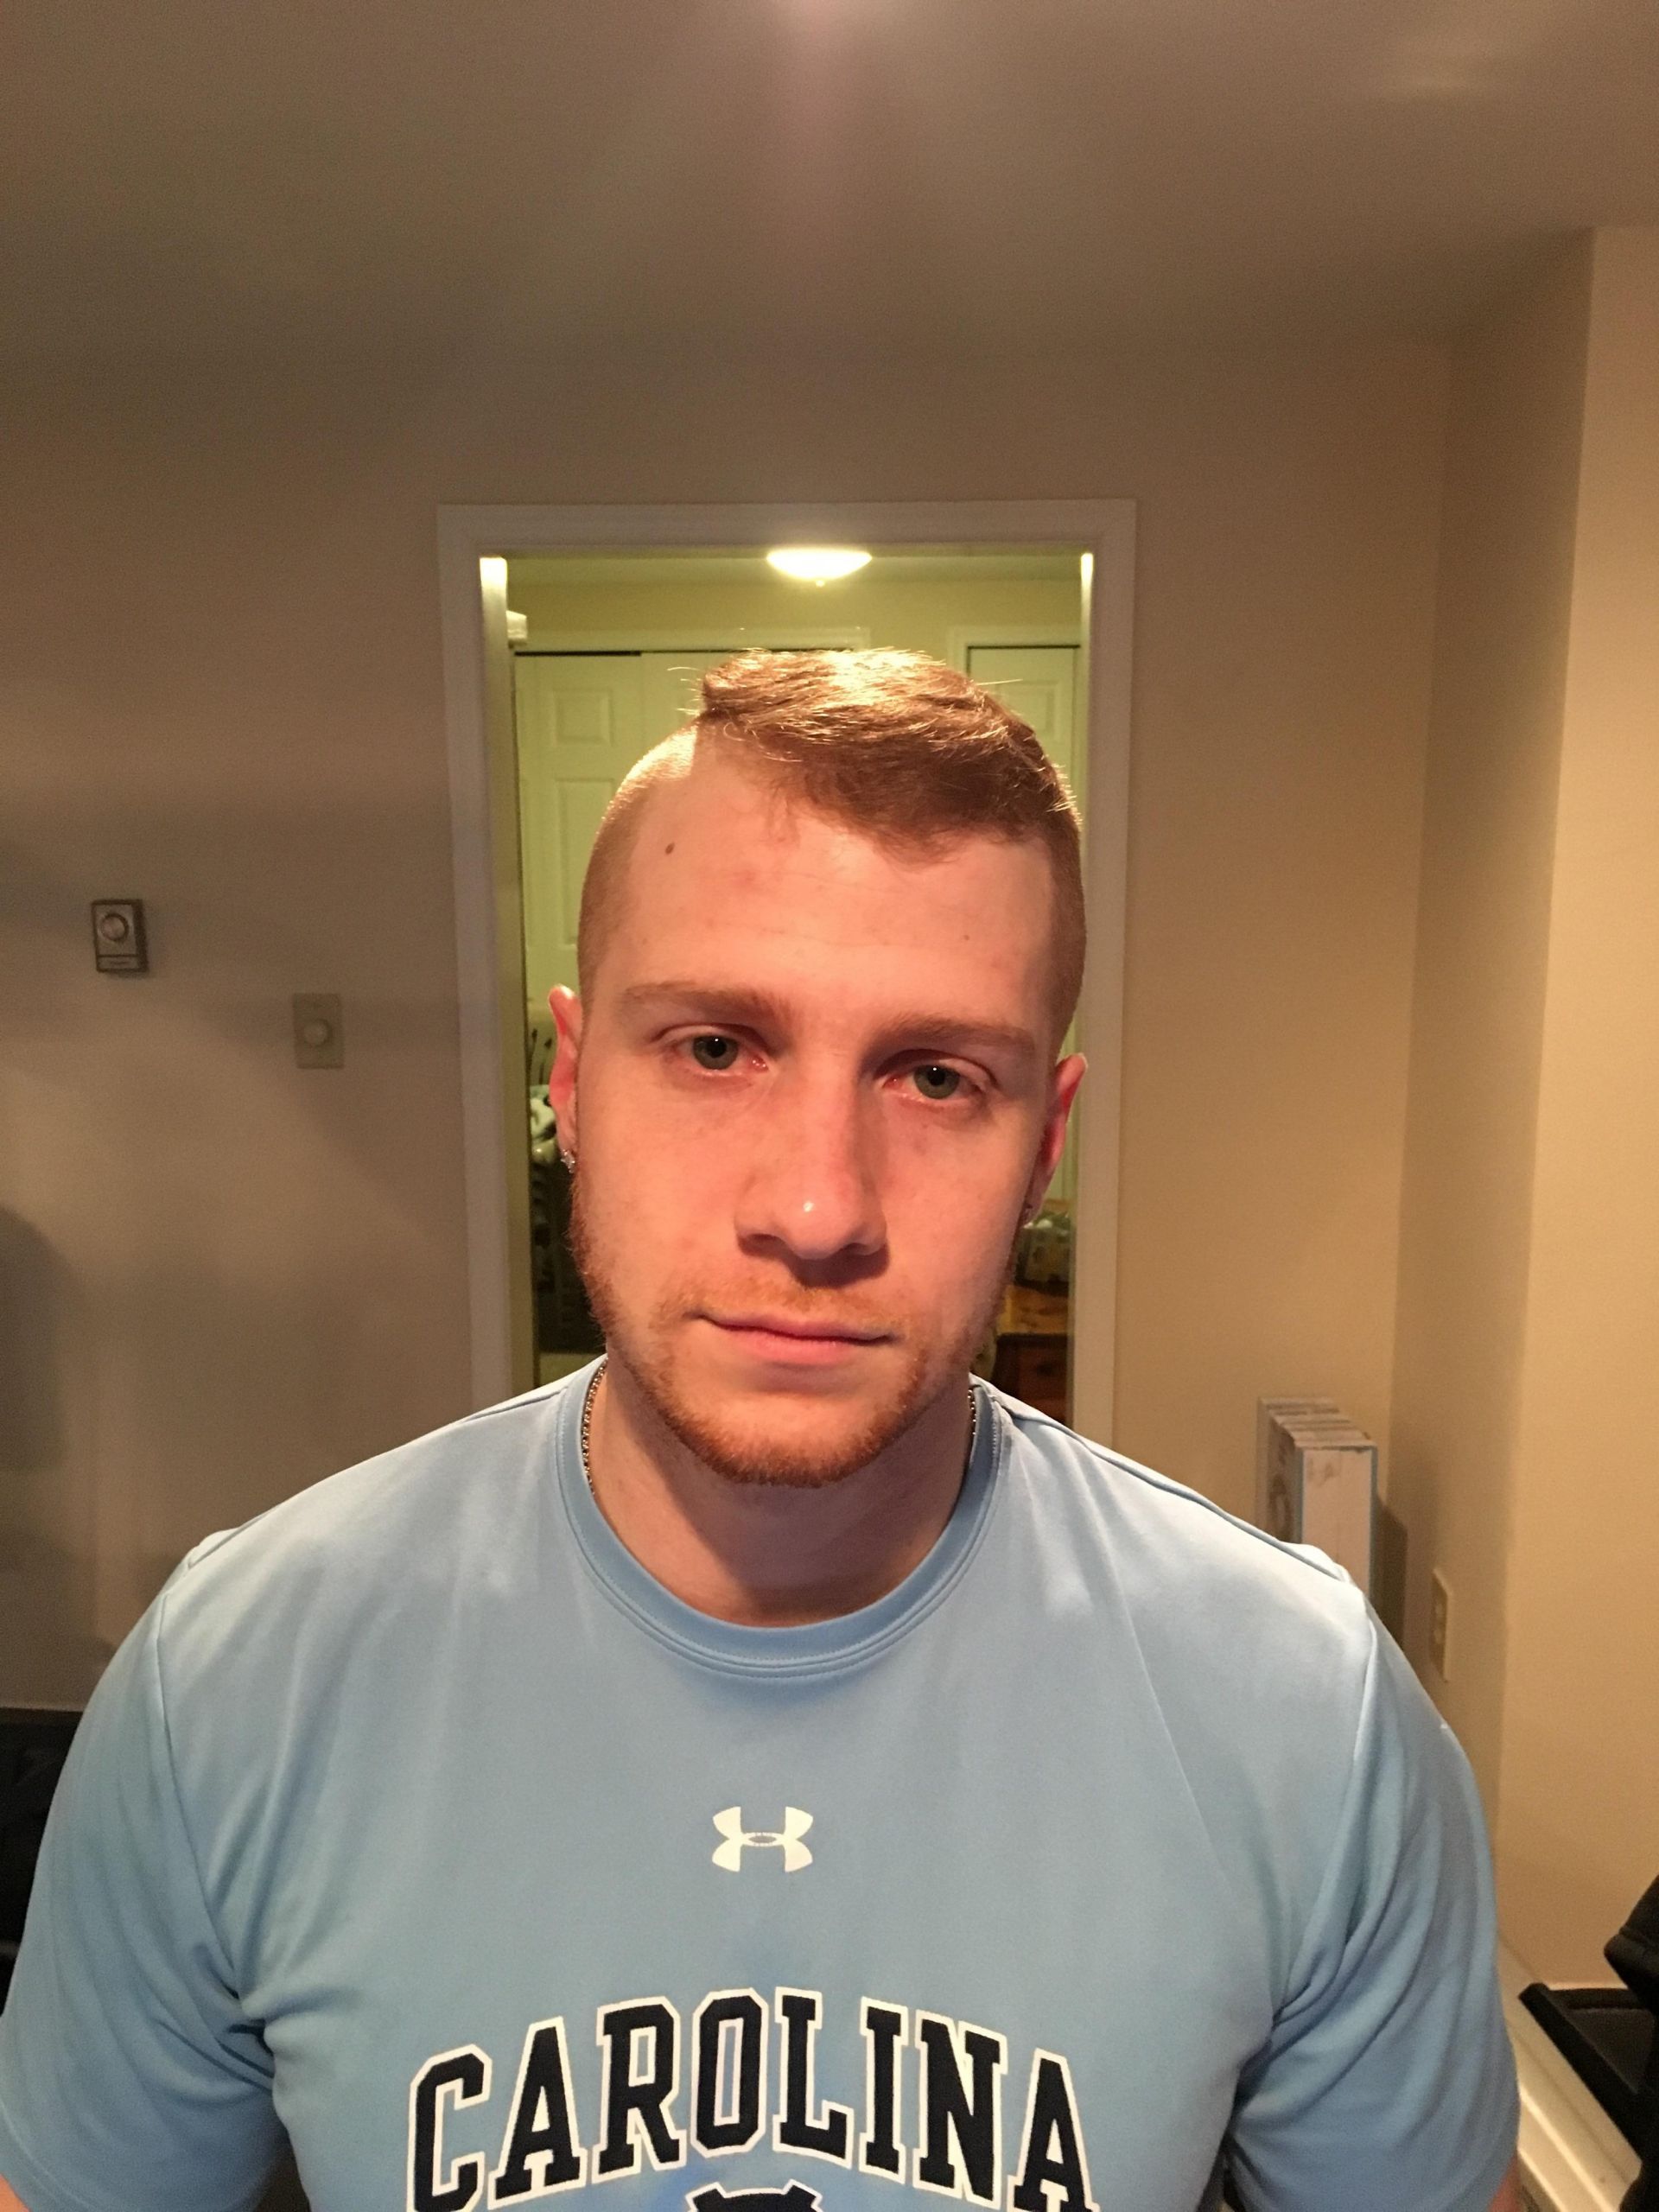 Mens Haircuts Reddit
 Haircut For Round Face Reddit Wavy Haircut